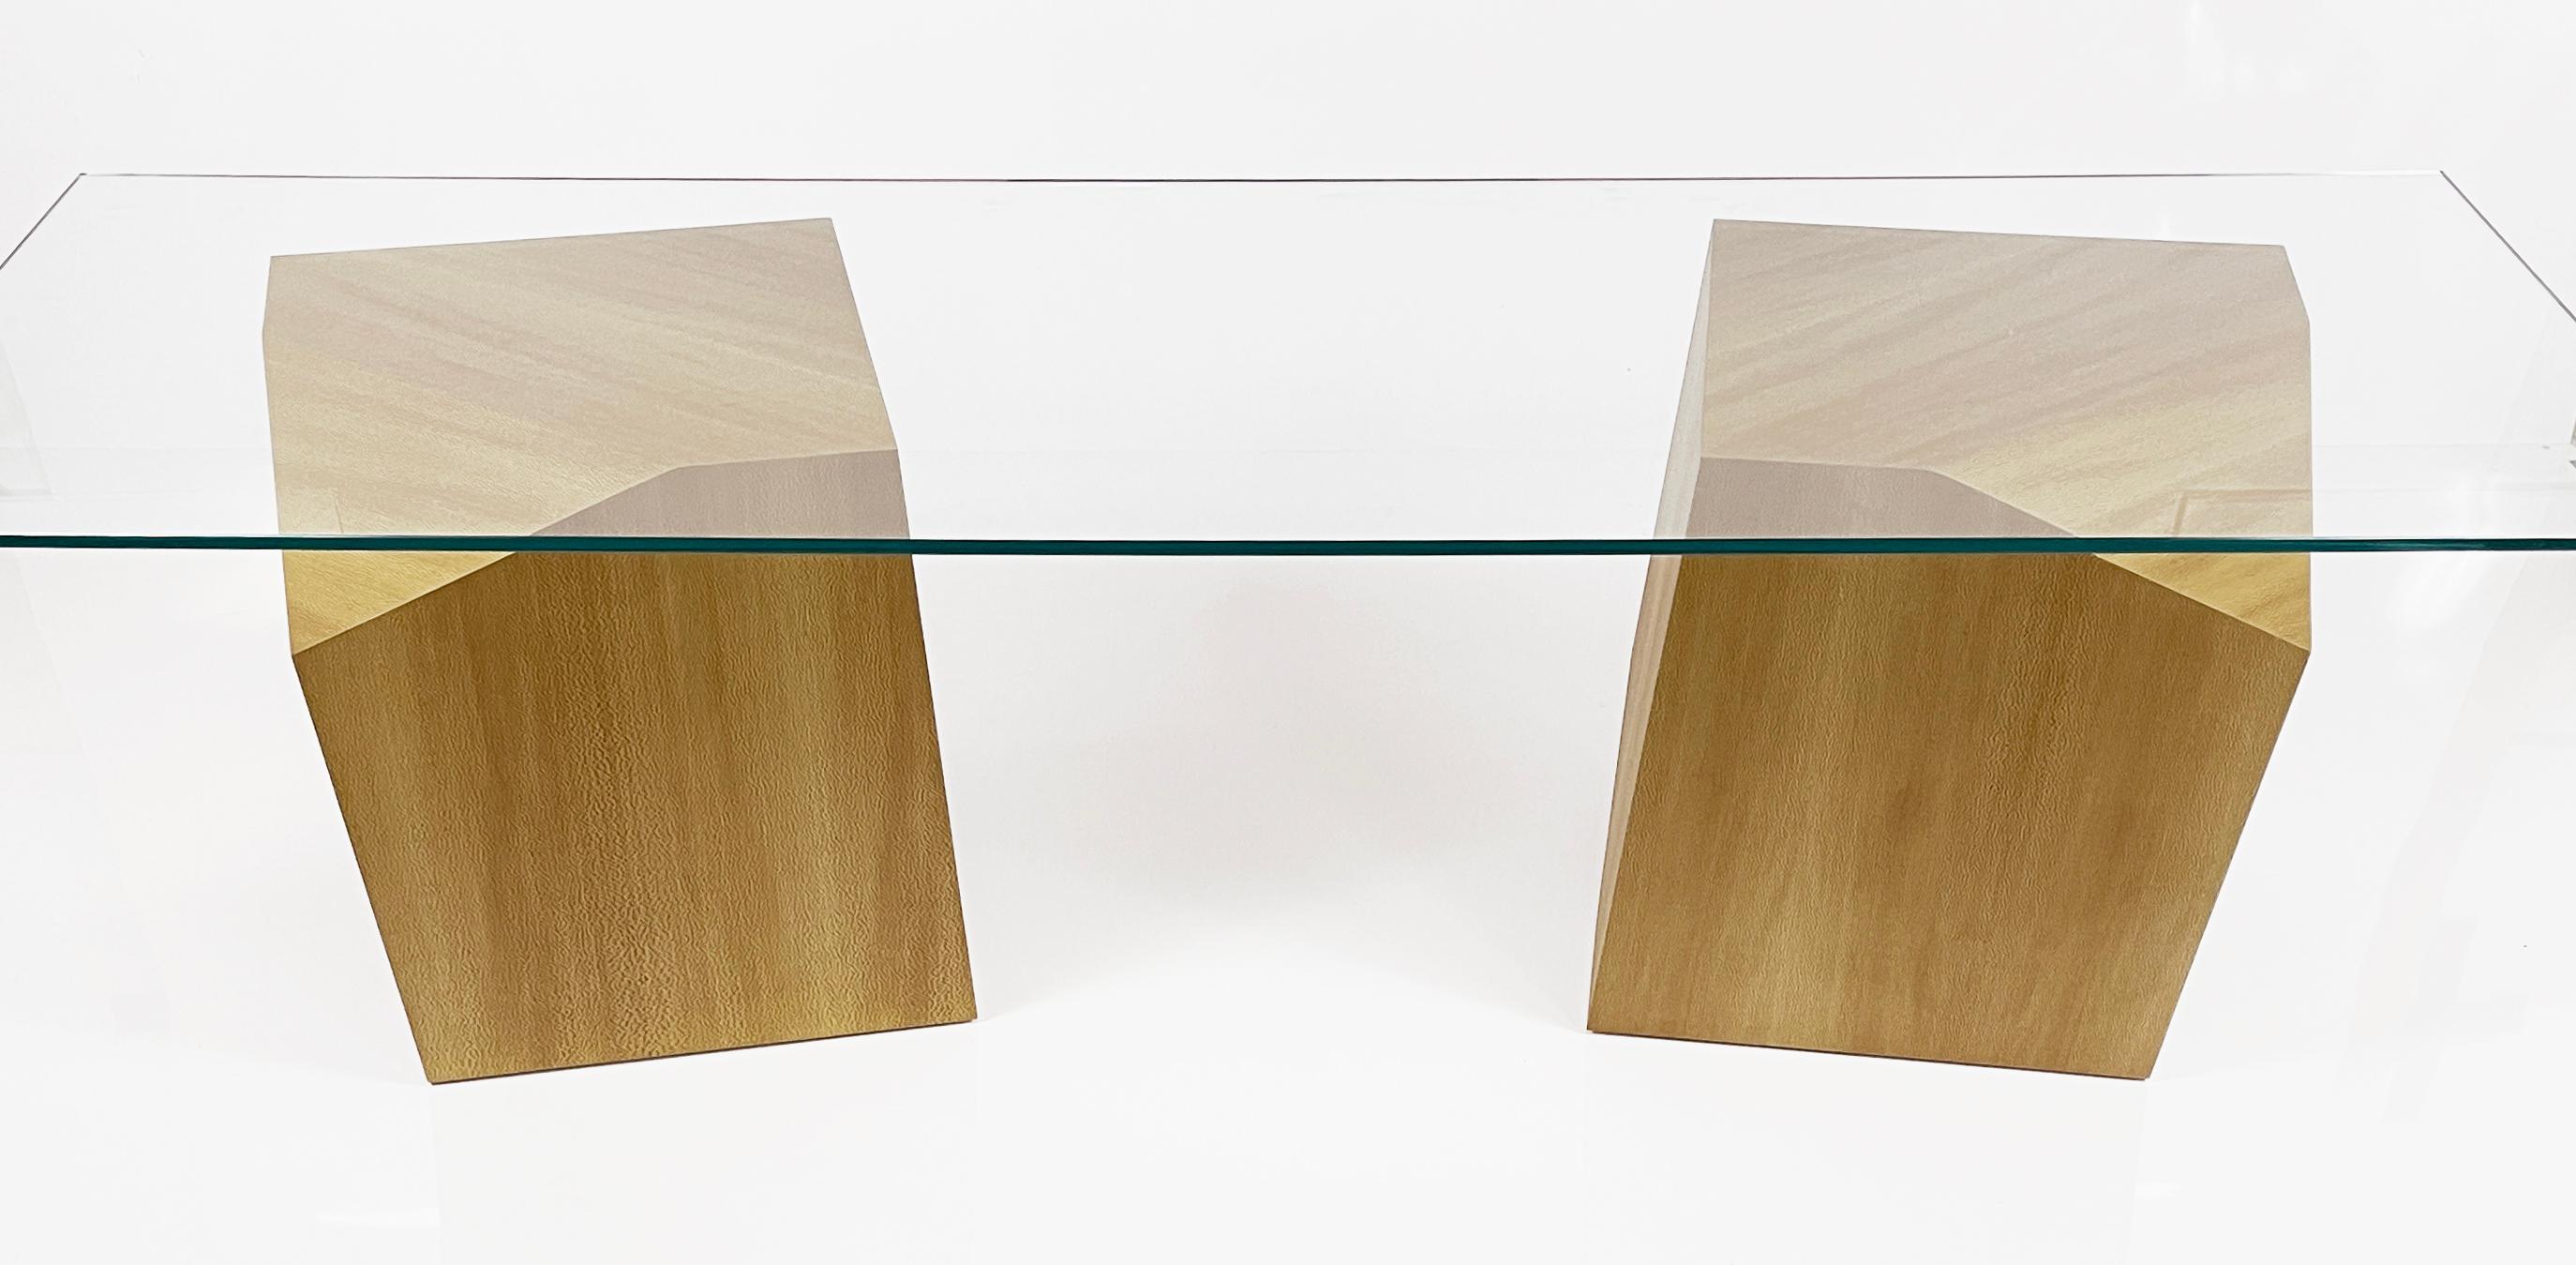 Minimalist sculpture #20 ( stumbling footmen ) desk, by American minimalist William Earle